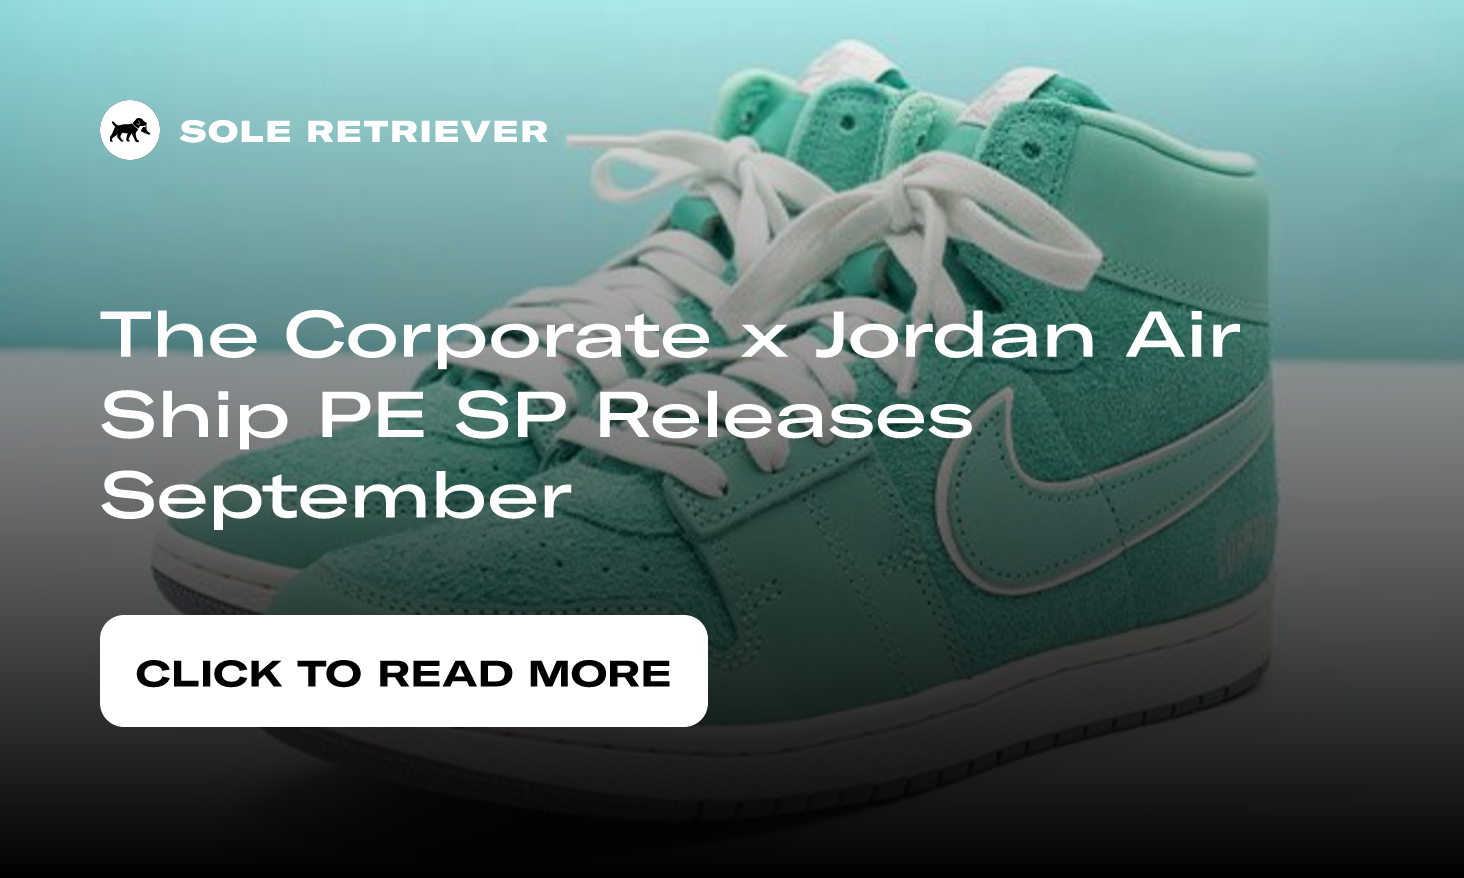 The Corporate x Jordan Air Ship PE SP Releases September